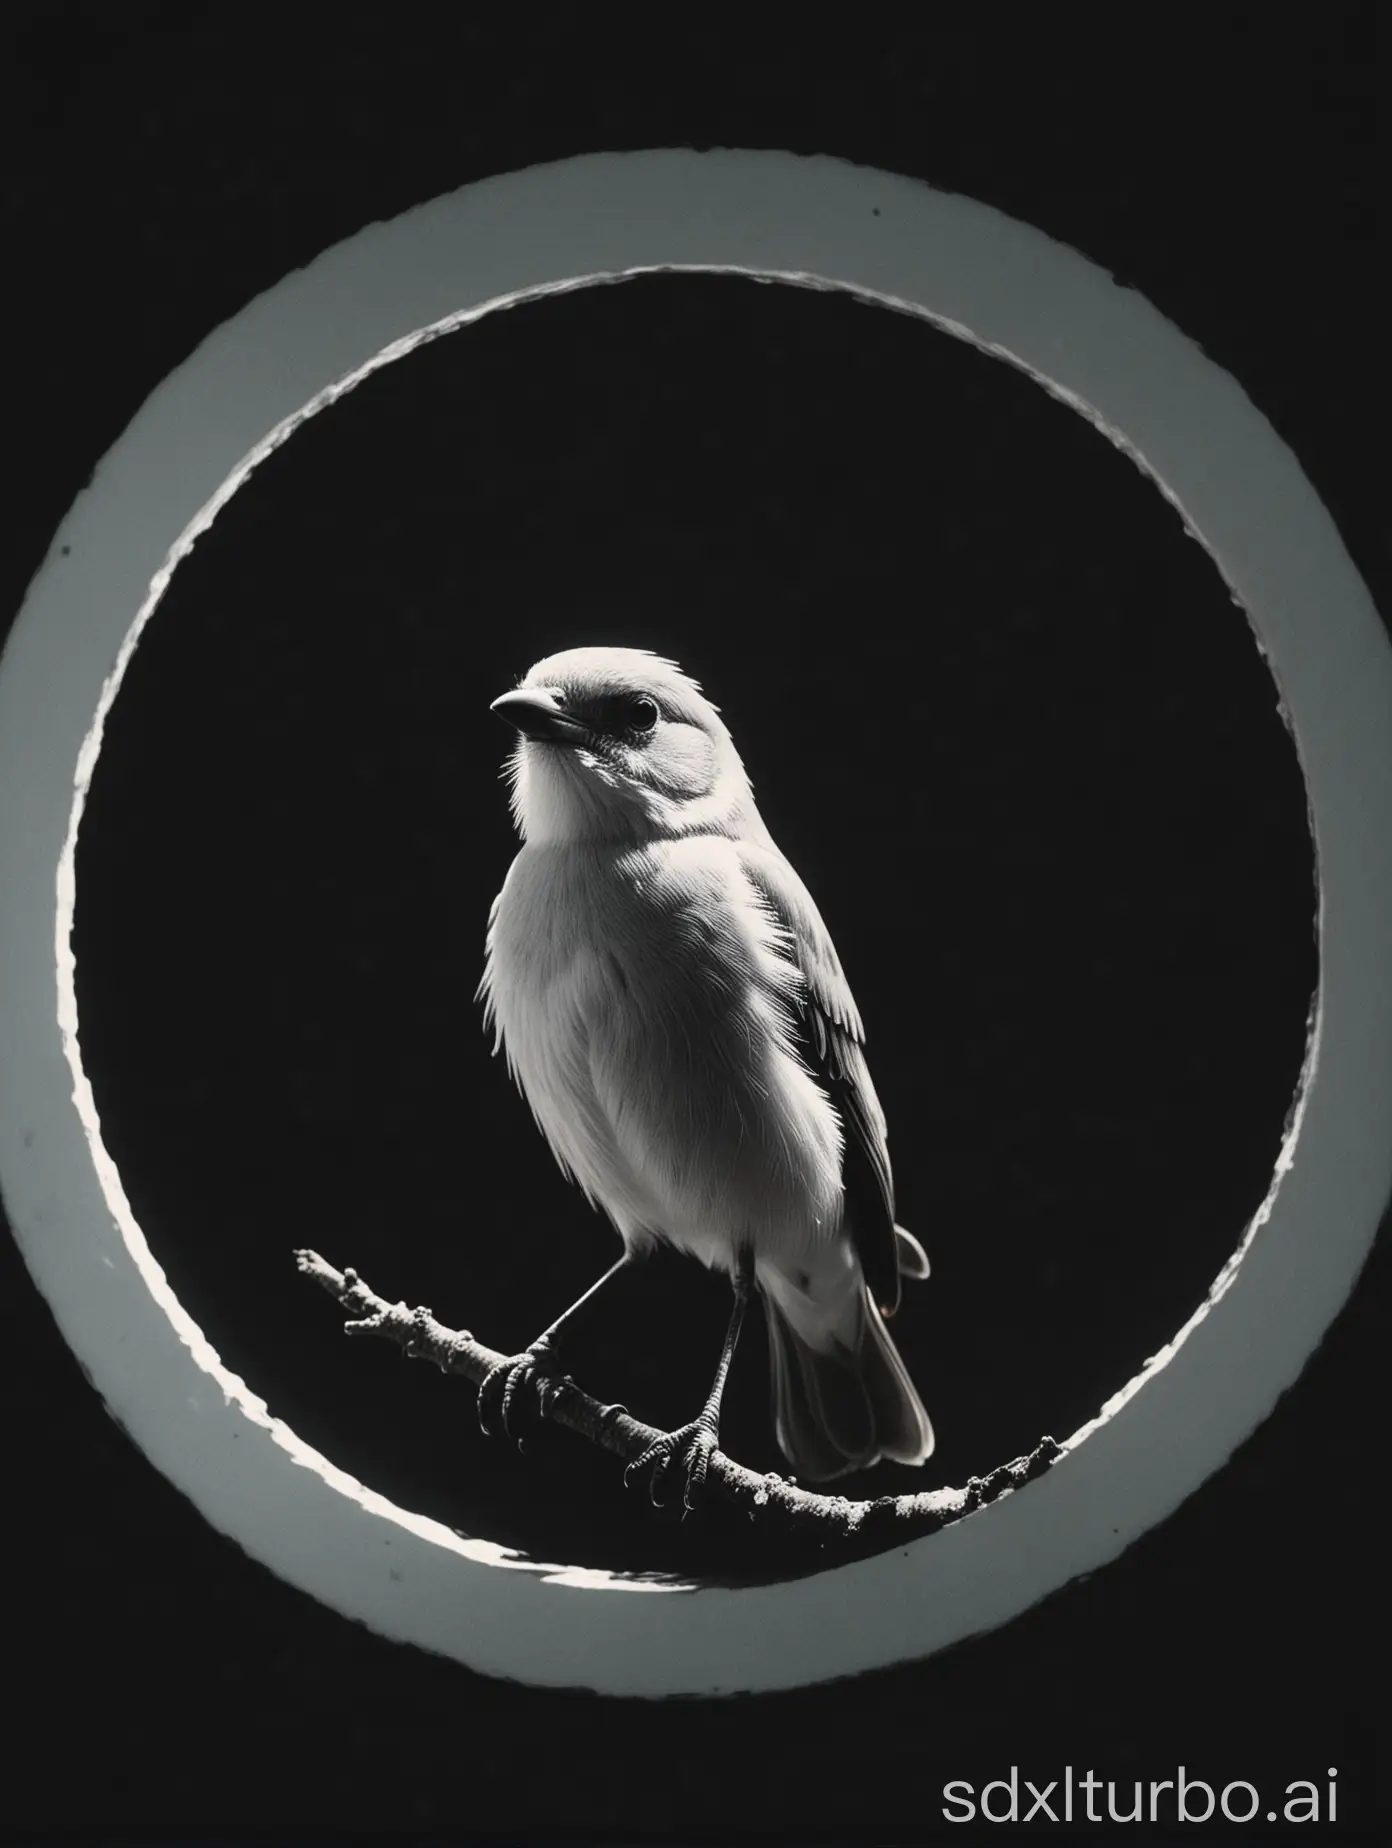 Illuminated-White-Bird-in-90s-Aesthetic-Nightshot-Photography